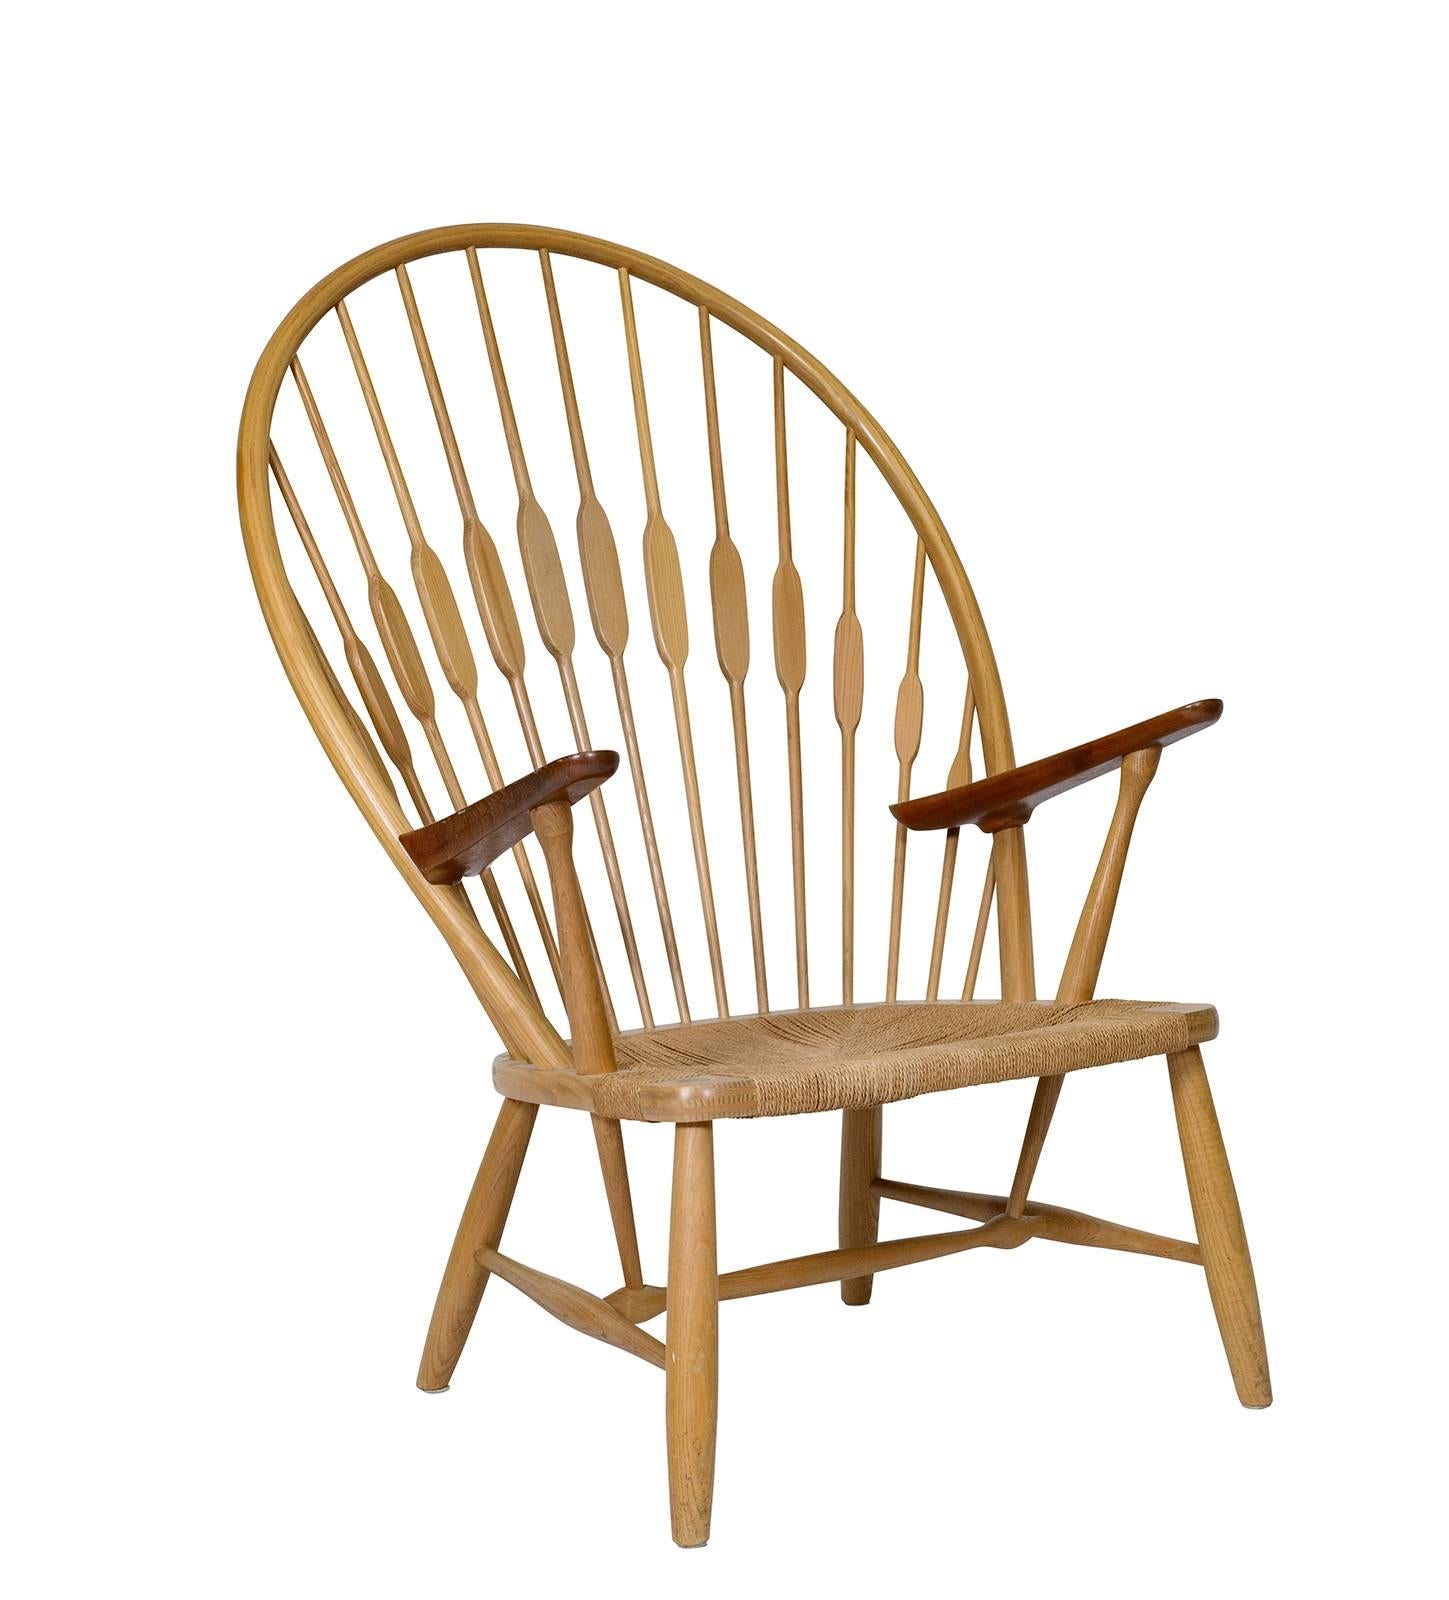 Hans Wegner "Peacock" Chair